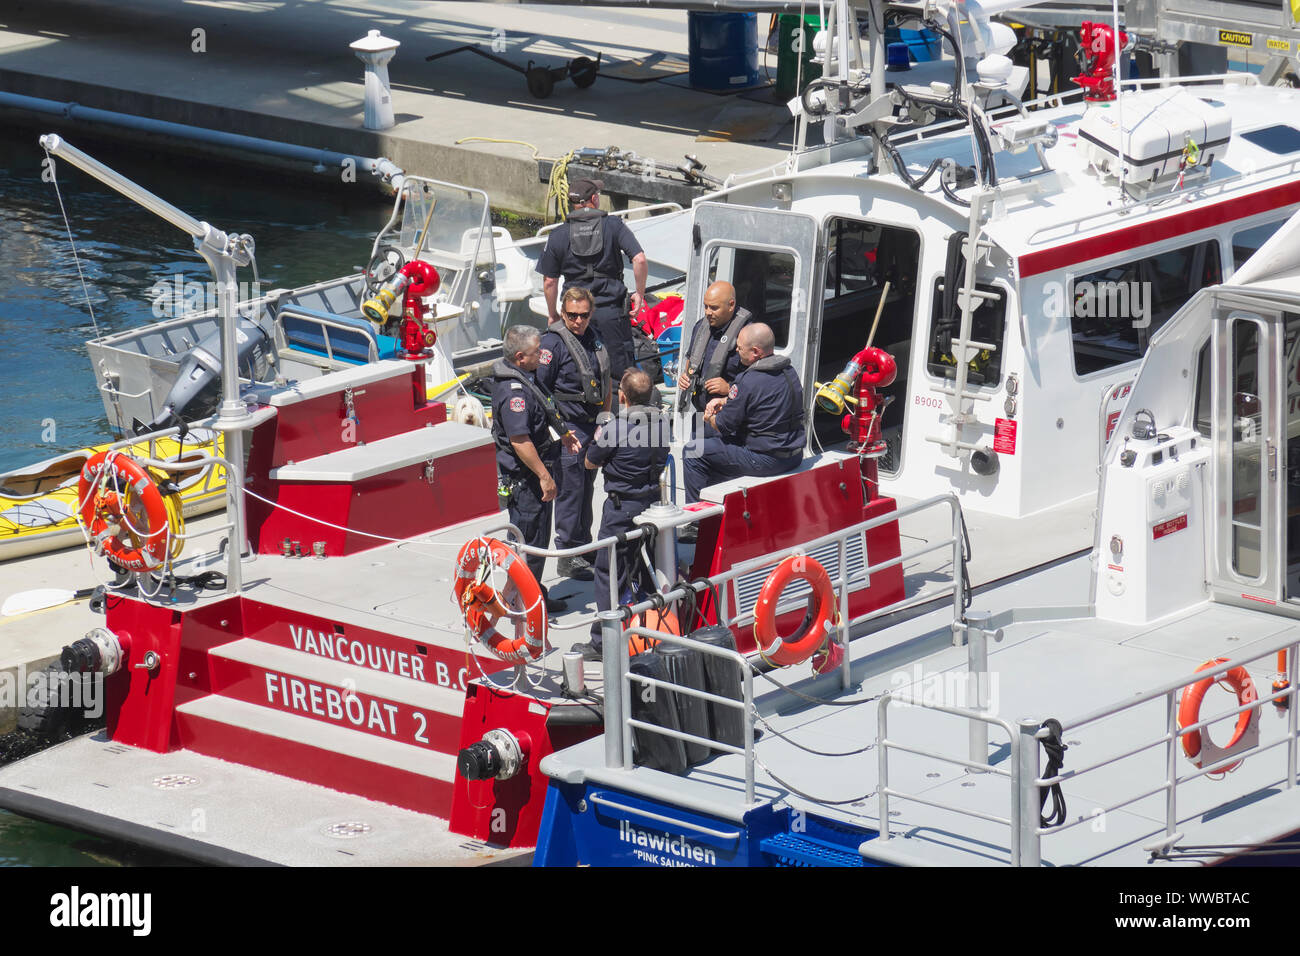 Feuerlöschboot2 Günstig in Coal Harbour mit Fire Rescue Crew an Bord, Hafen von Vancouver, Vancouver, B.C., Kanada. Juni 15, 2019 Stockfoto